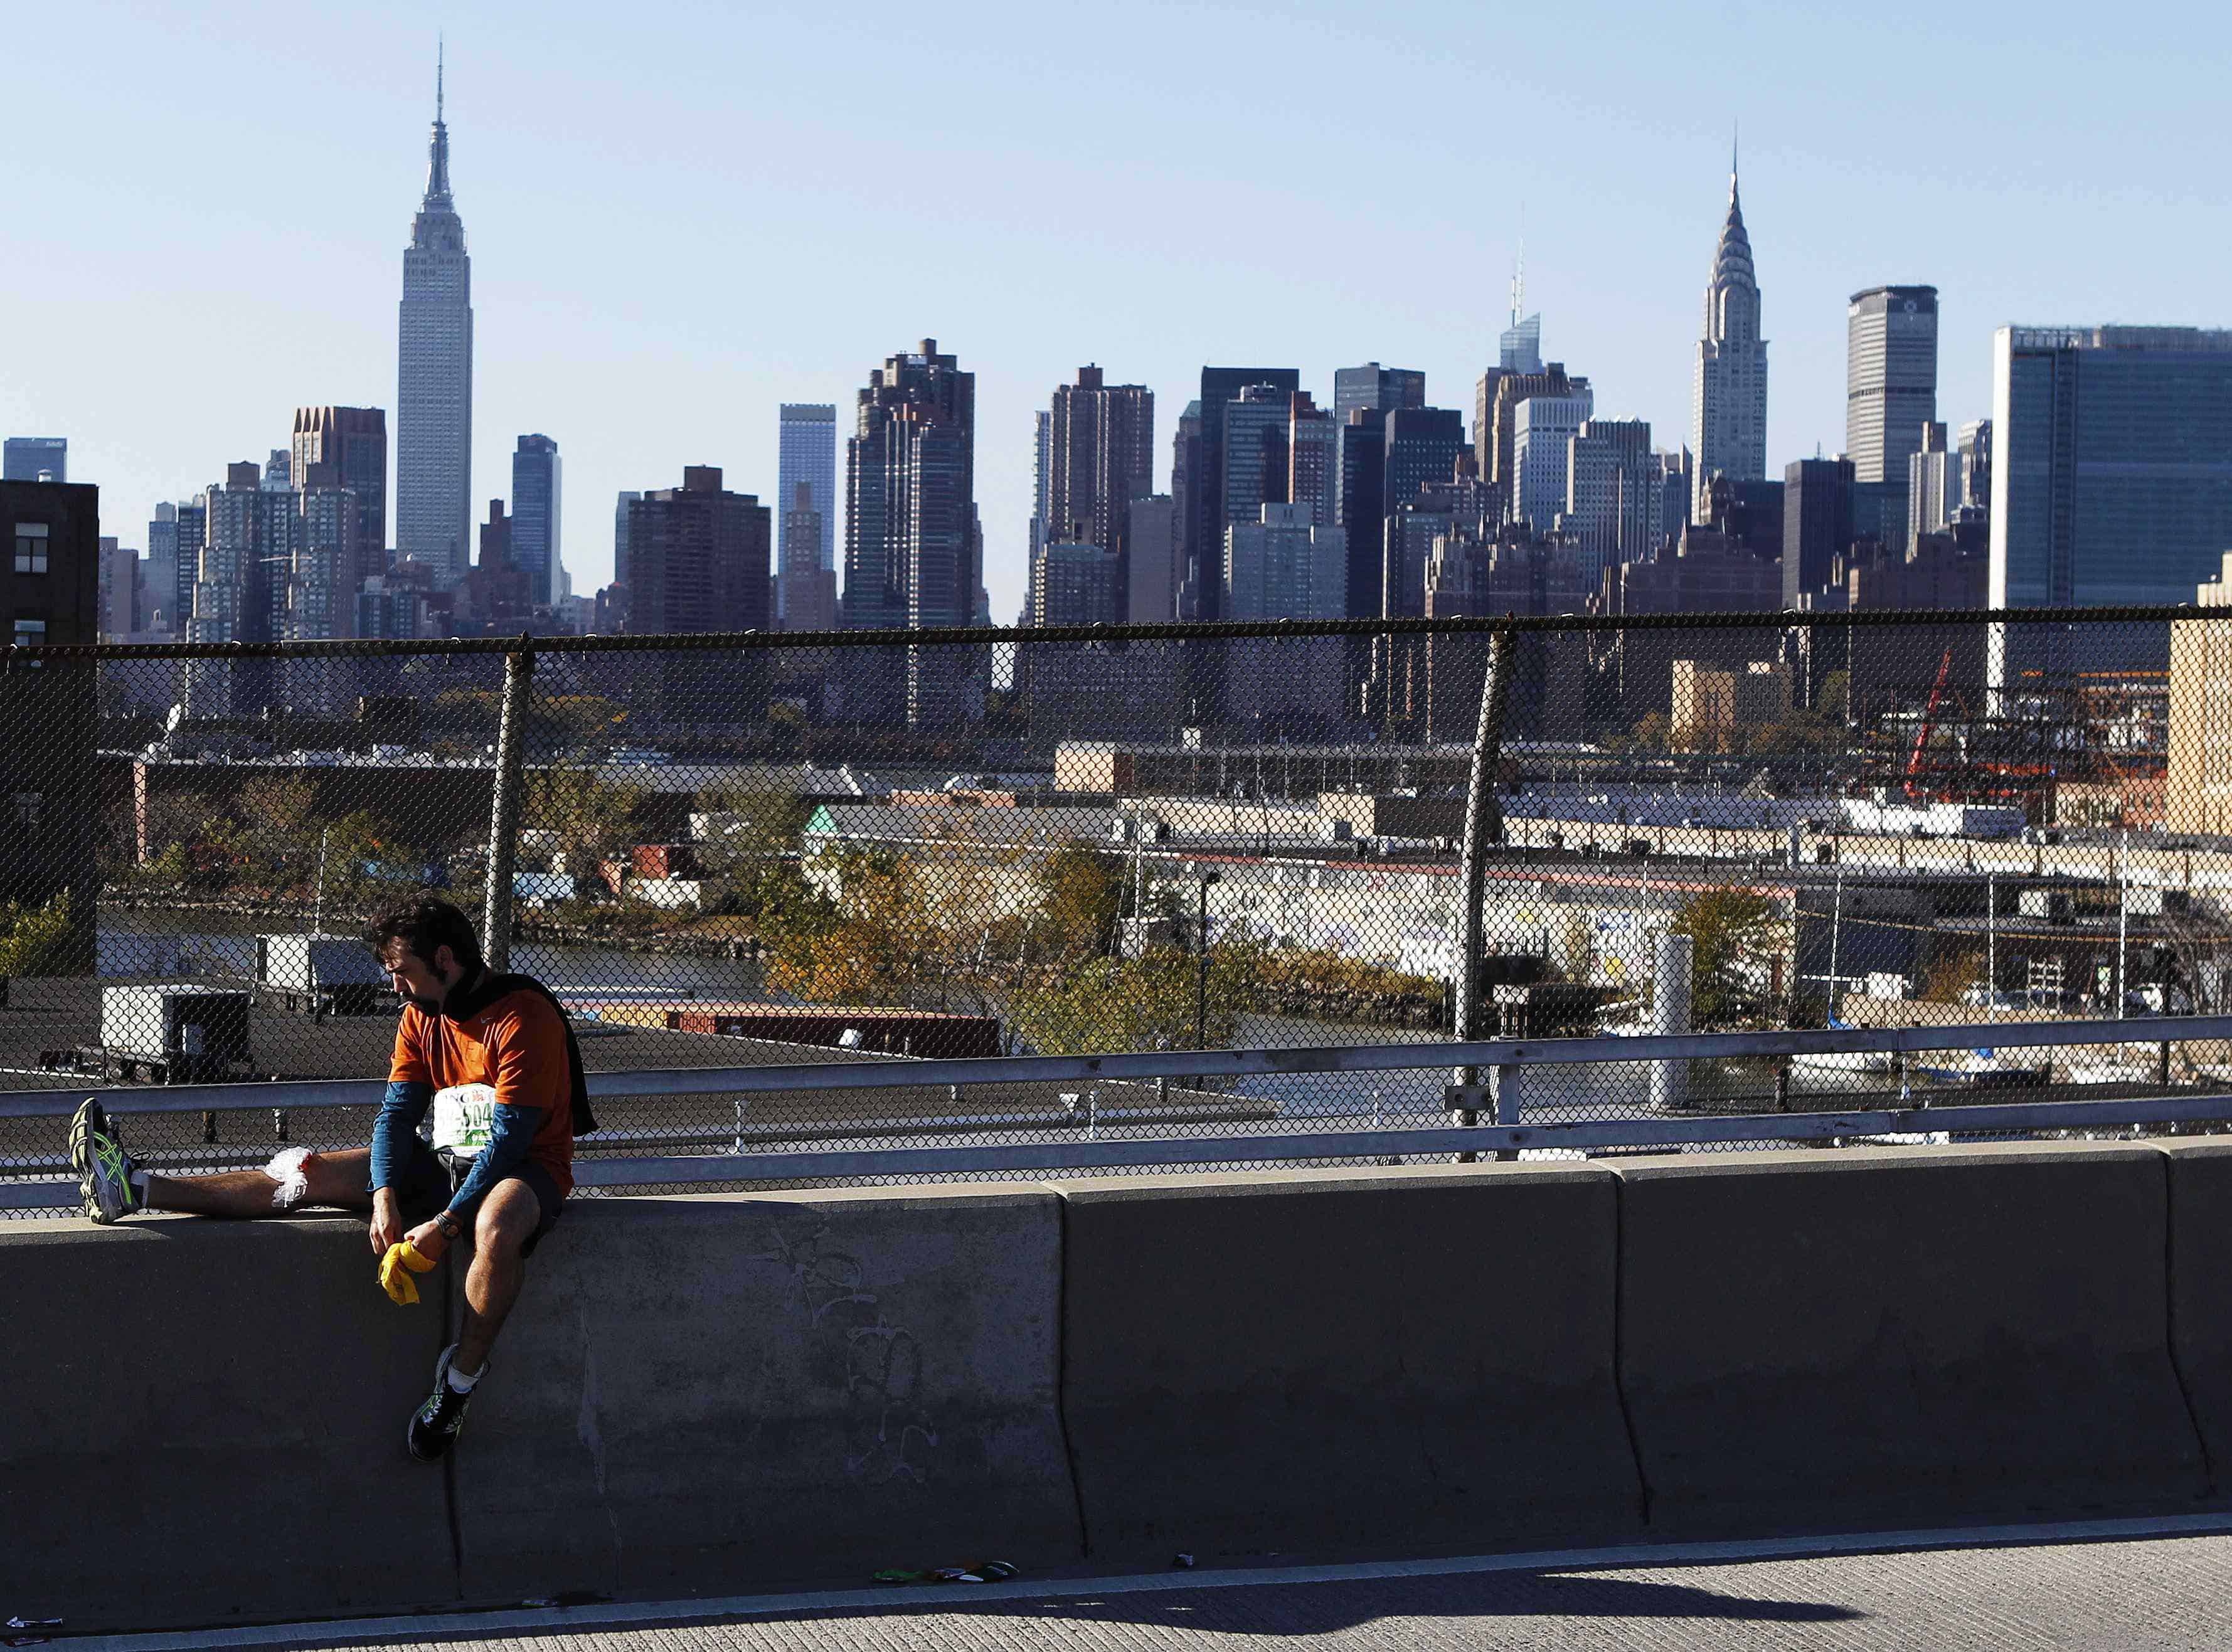 Runner Rancel from Venezuela rests his injured knee on the Pulaski Bridge during the New York City Marathon in New York